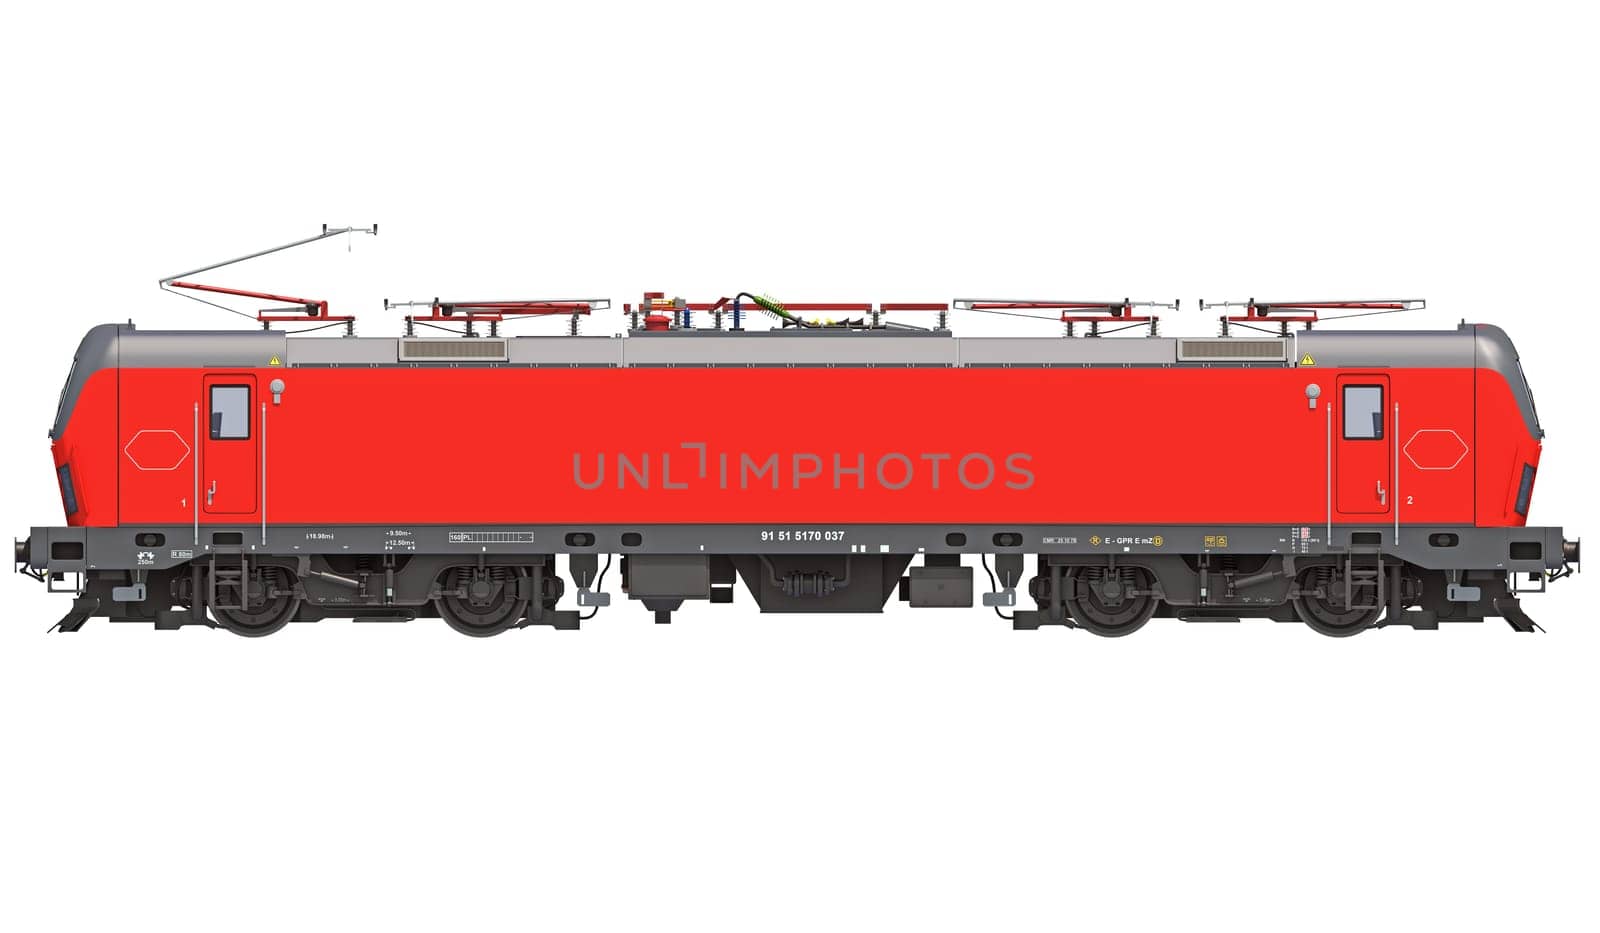 Locomotive train 3D rendering model on white background